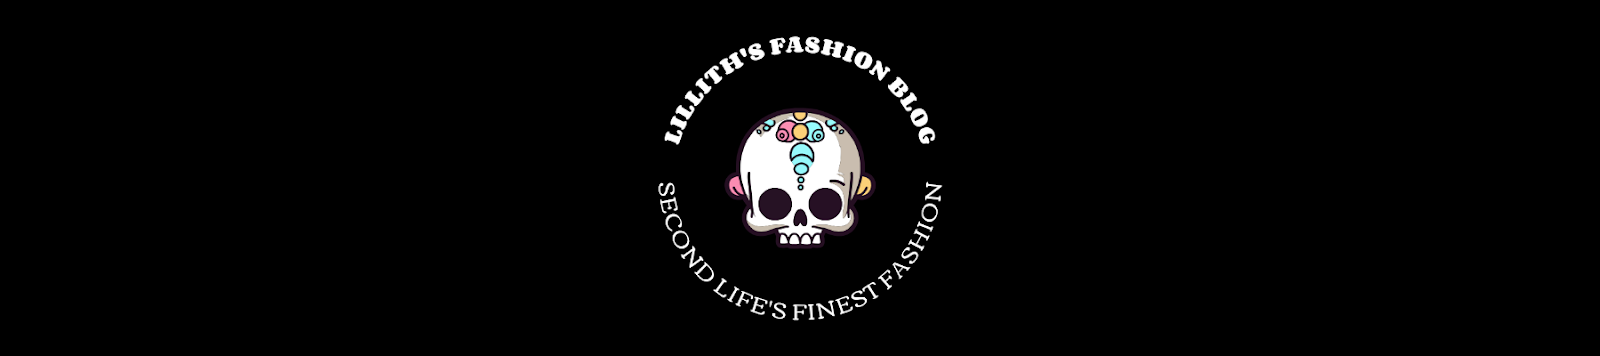 Lillith's Second Life Fashion Blog